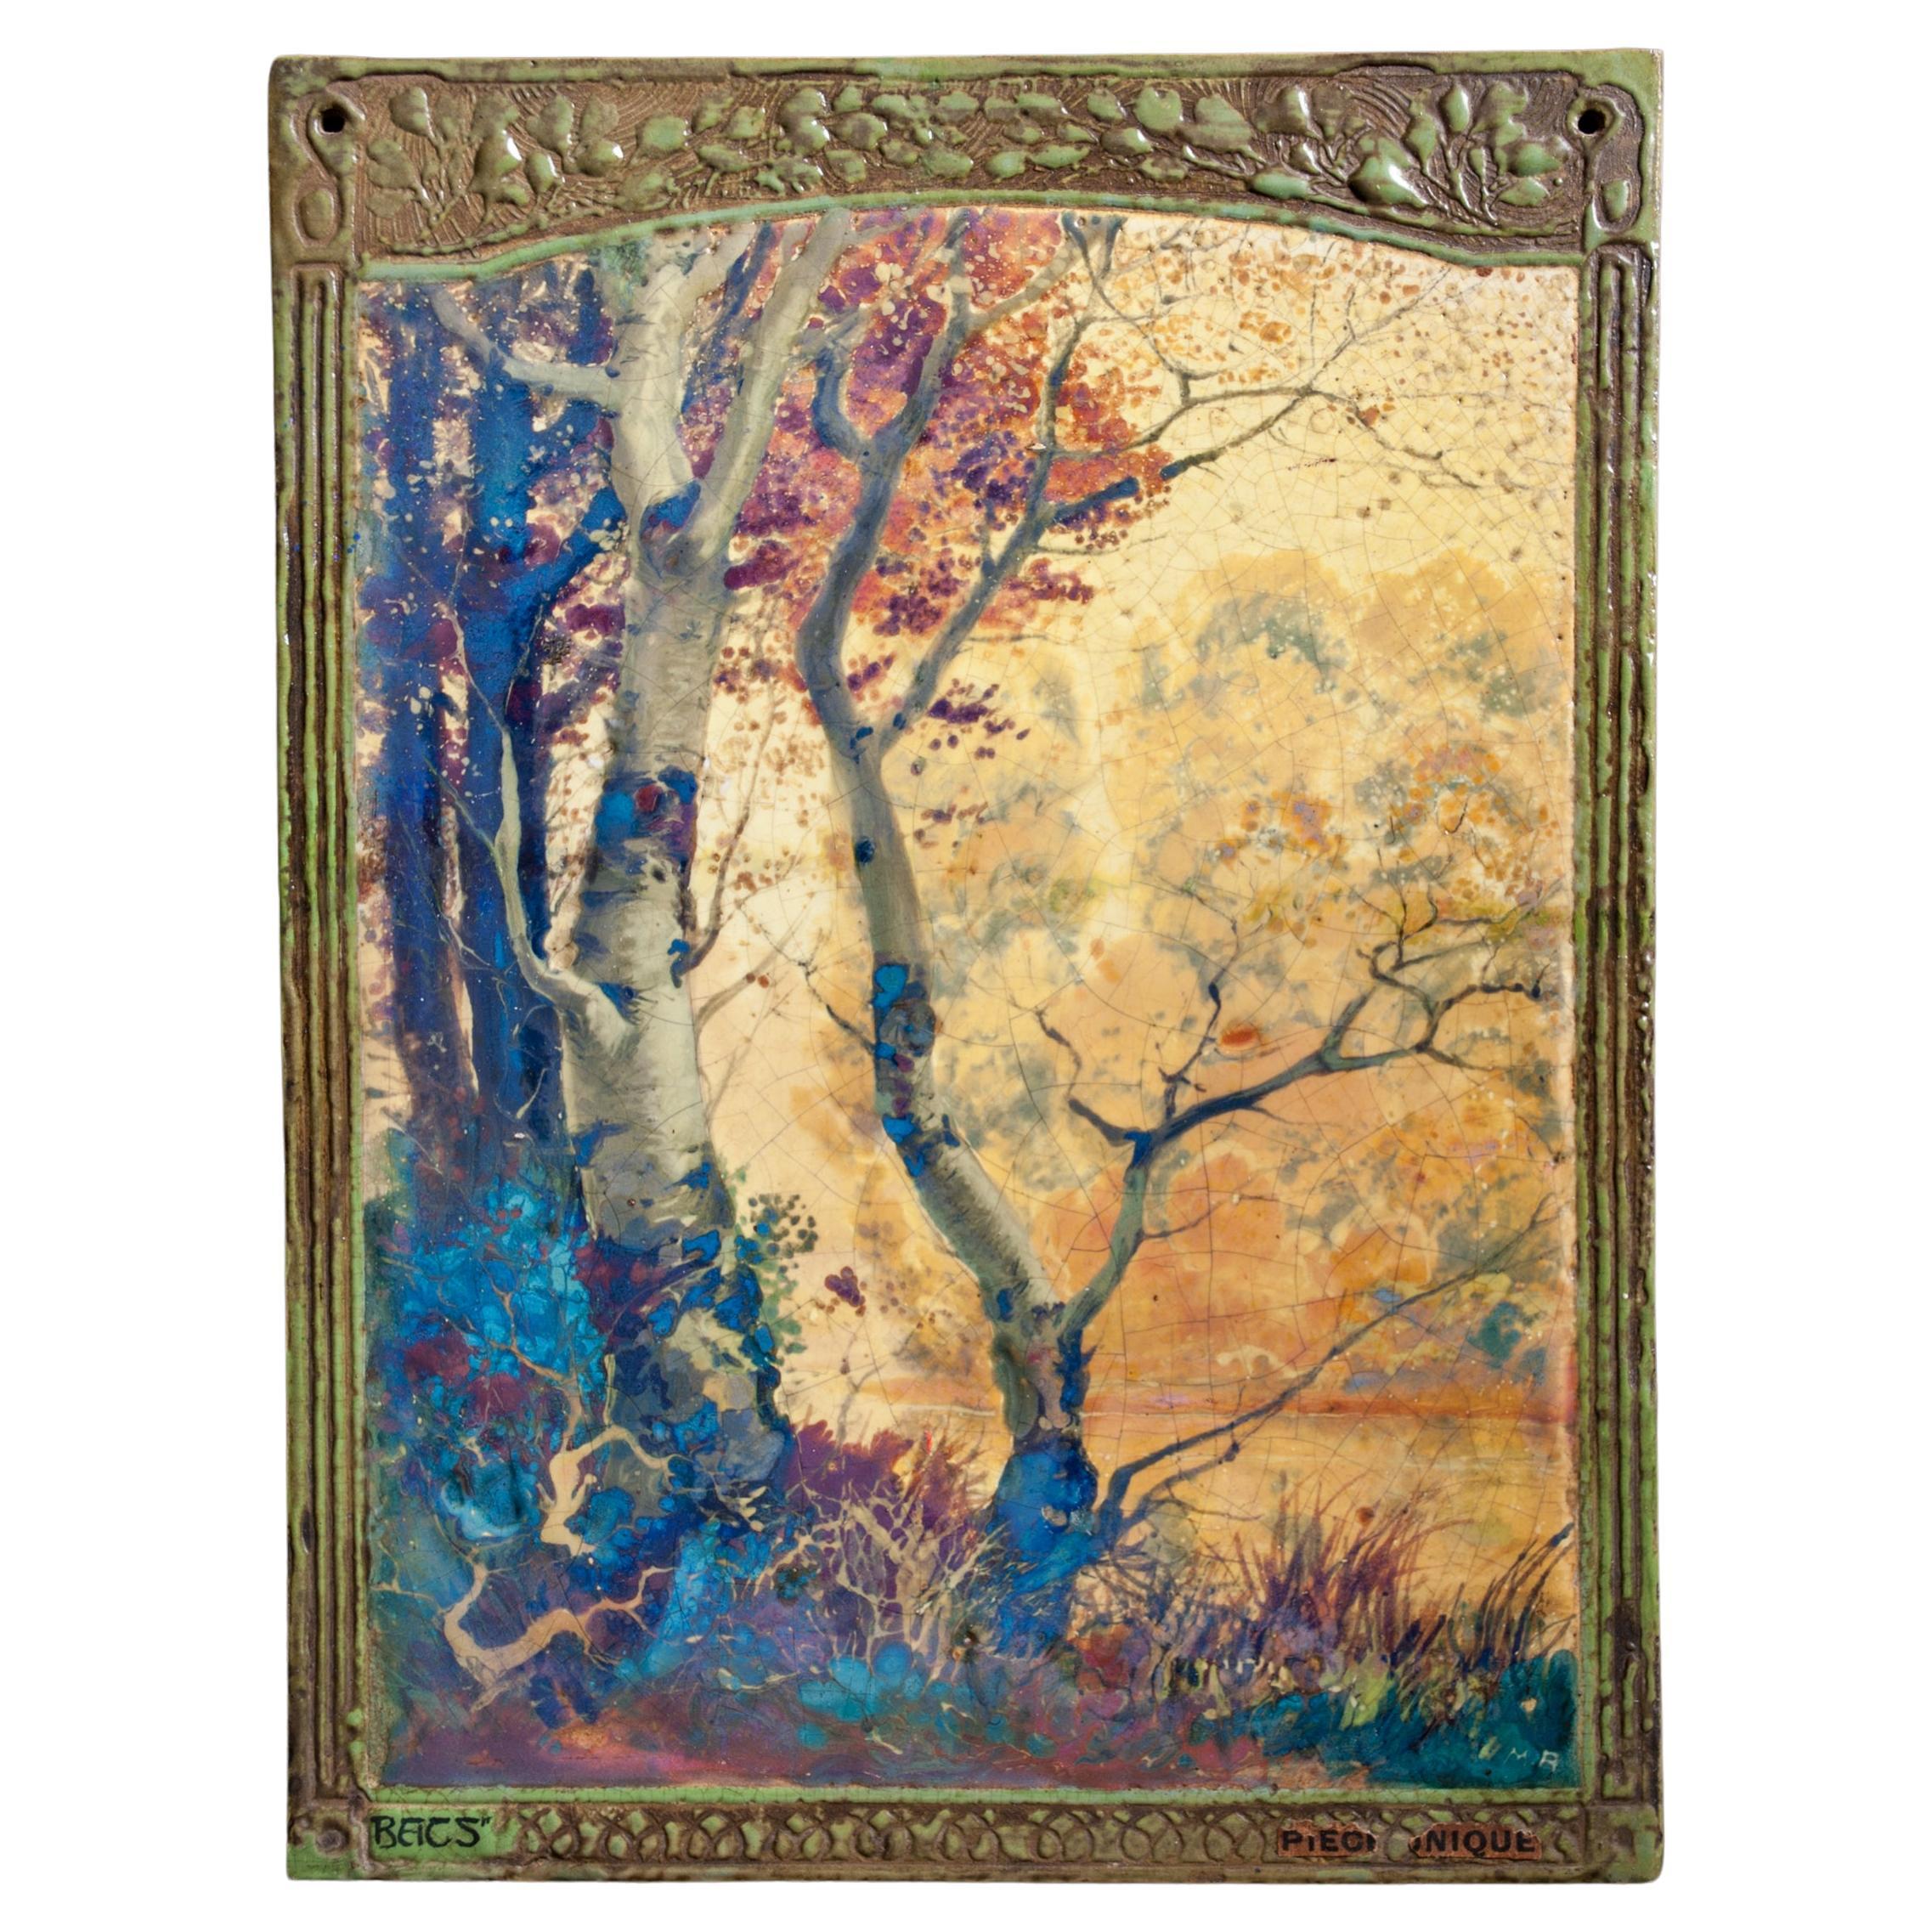 Iridescent Art Nouveau Wall Tile "Birch Forest" by Alexandre Marius for BACS